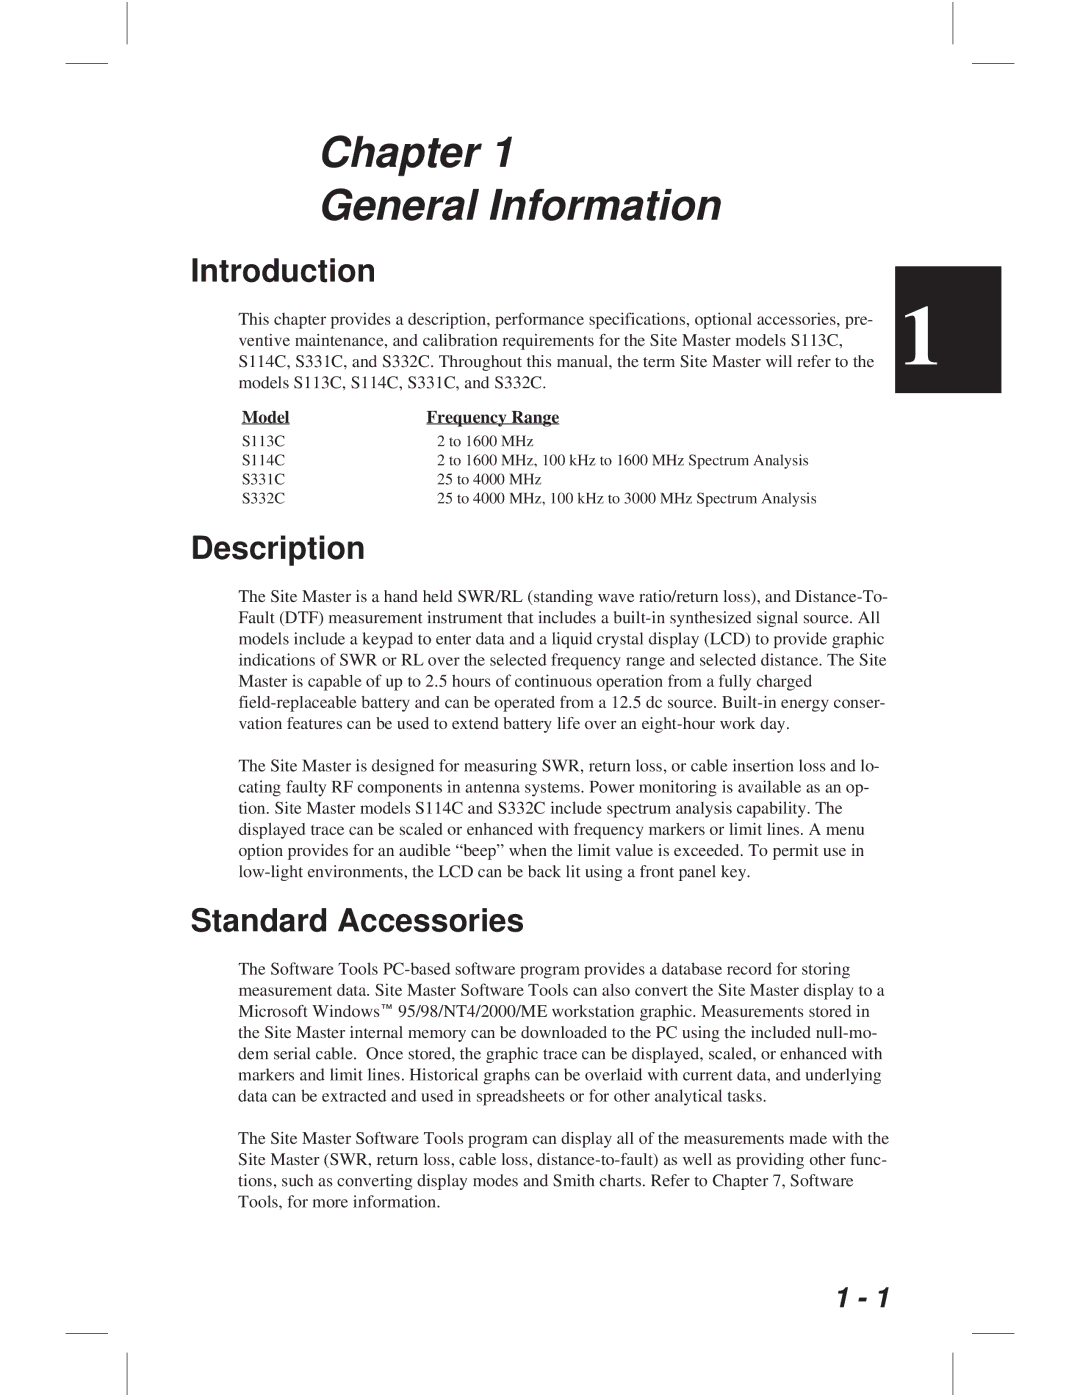 Anritsu S113C, S332C, S114C, S331C manual Chapter General Information, Introduction, Description, Standard Accessories 